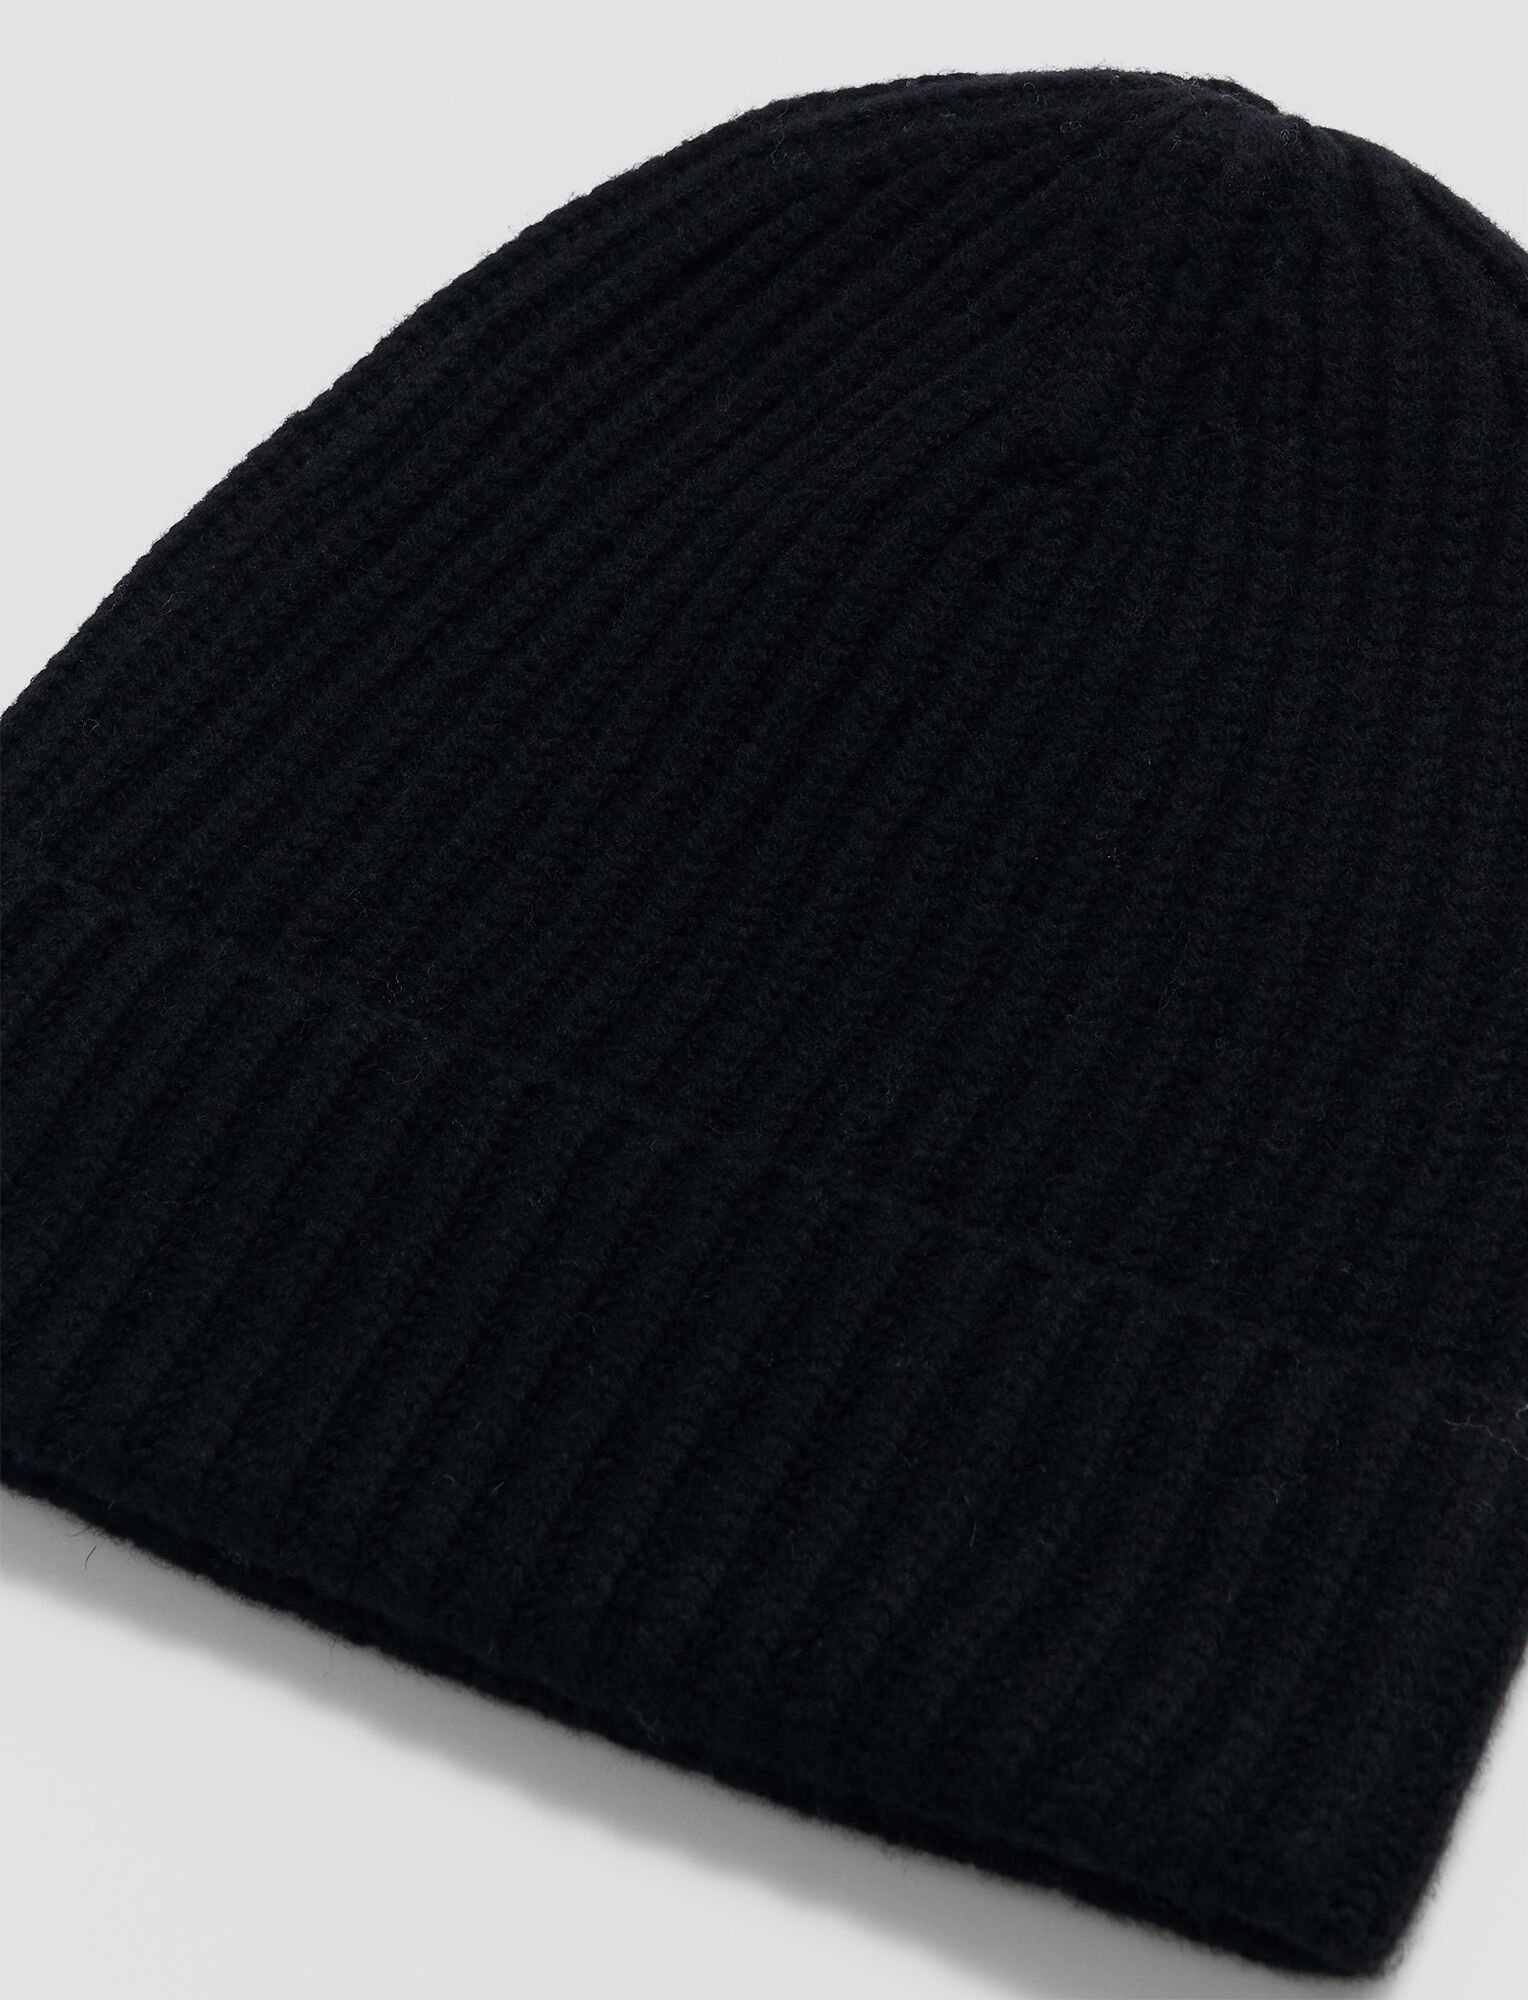 Joseph, Cardigan Stitch Hat, in BLACK